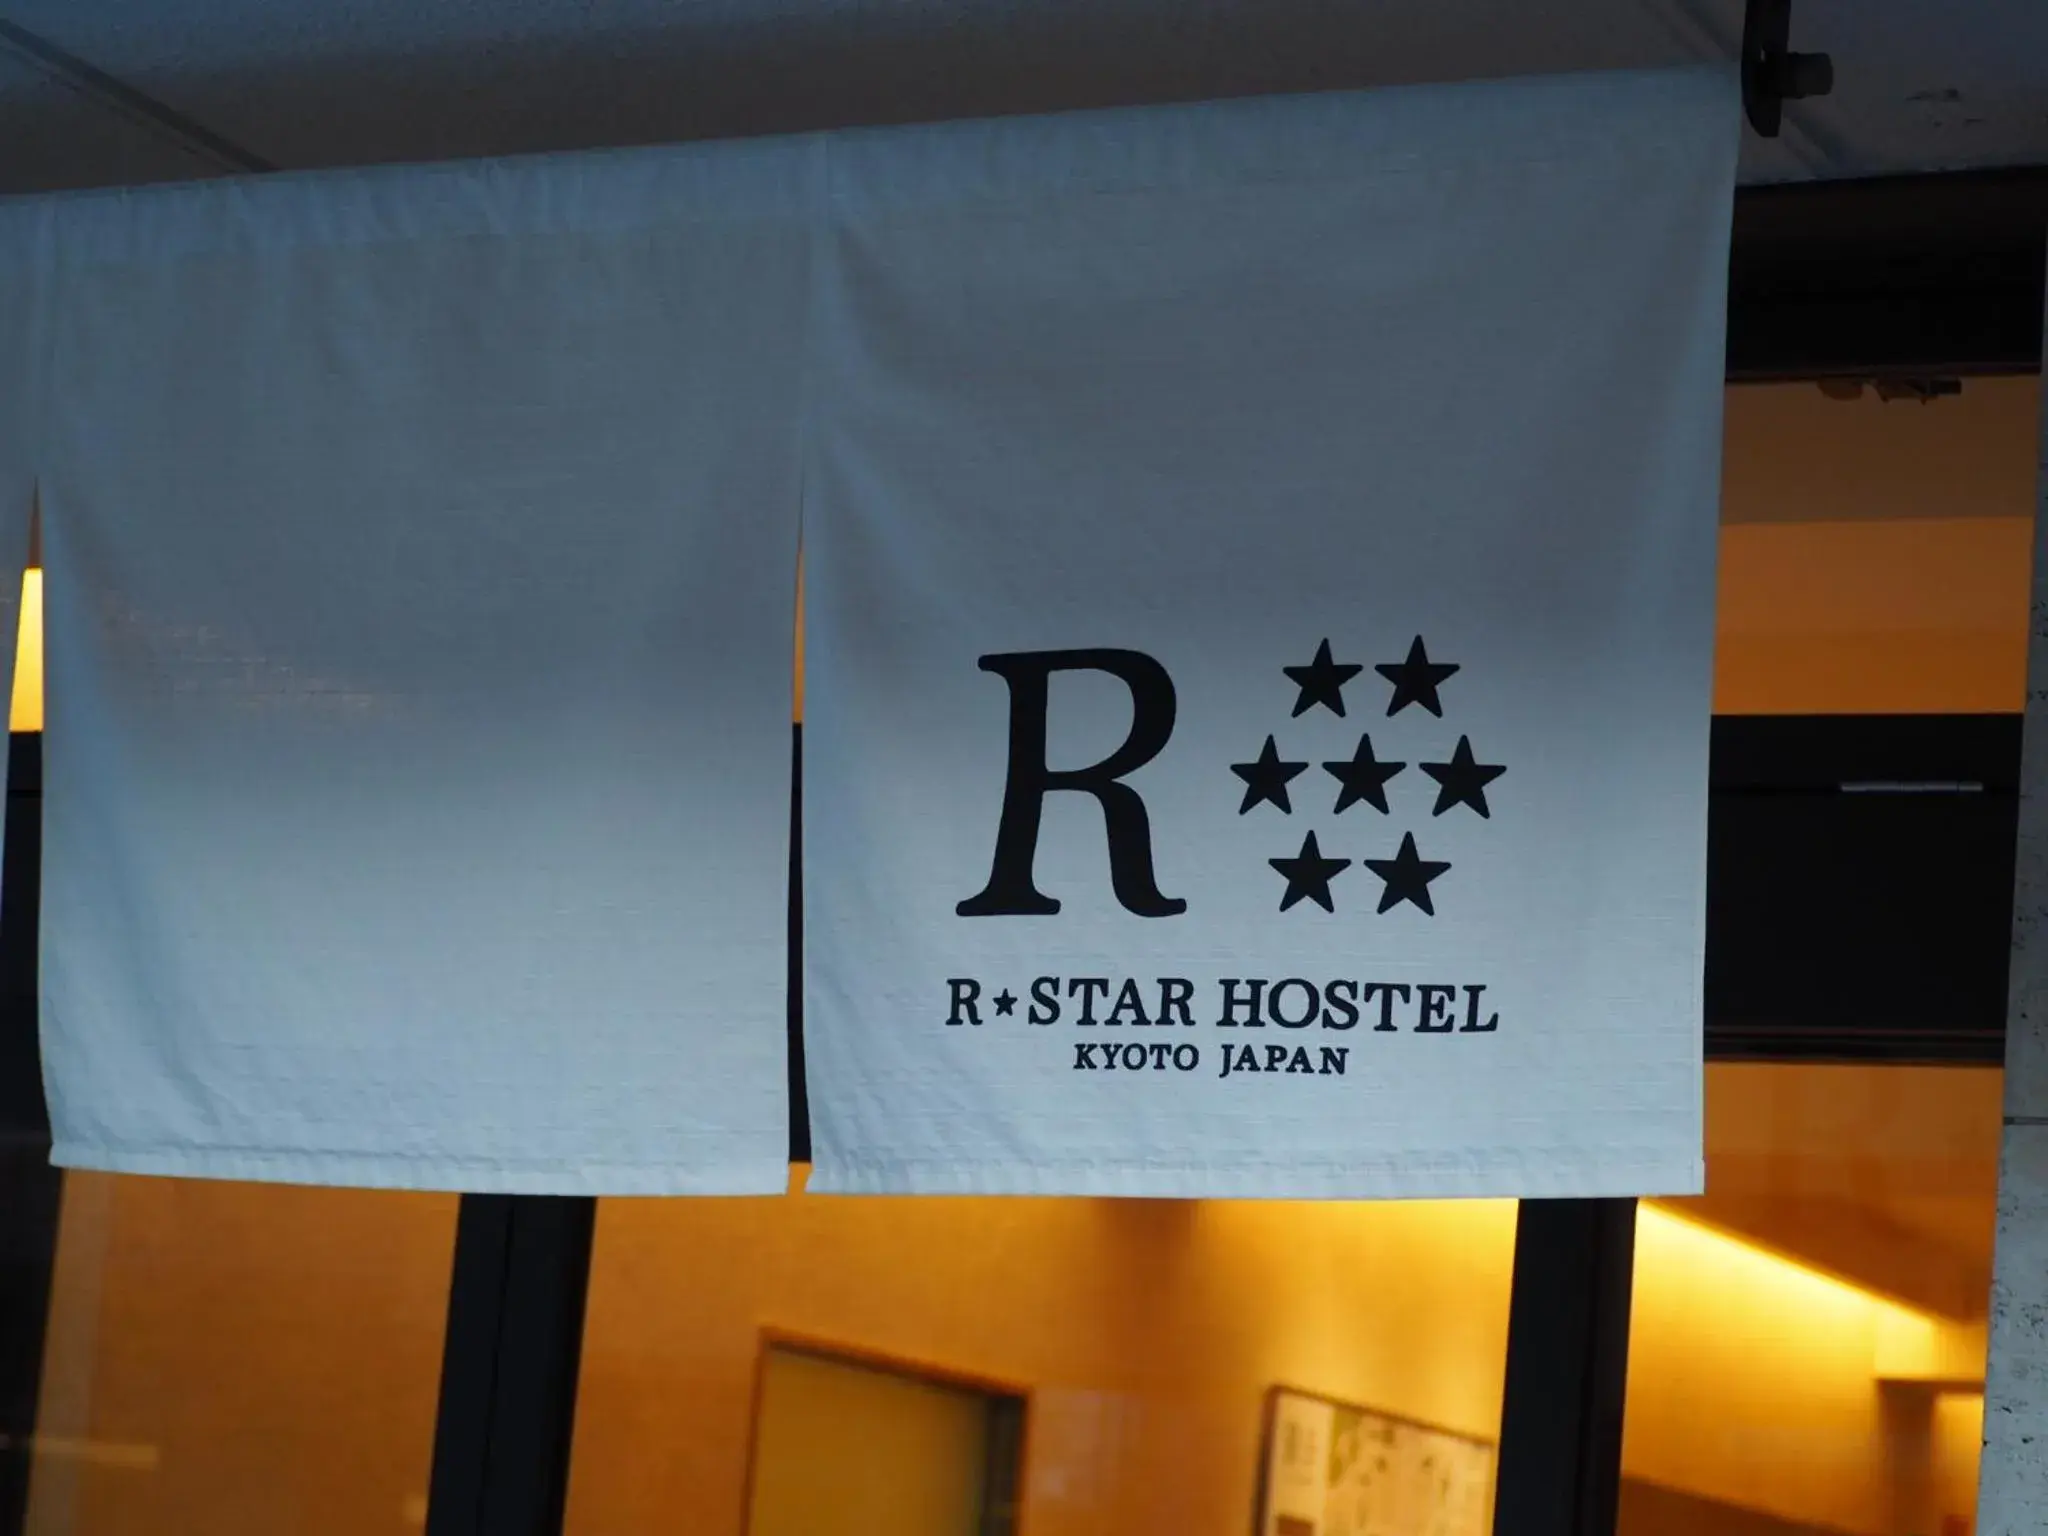 R. Star Hostel Kyoto Japan